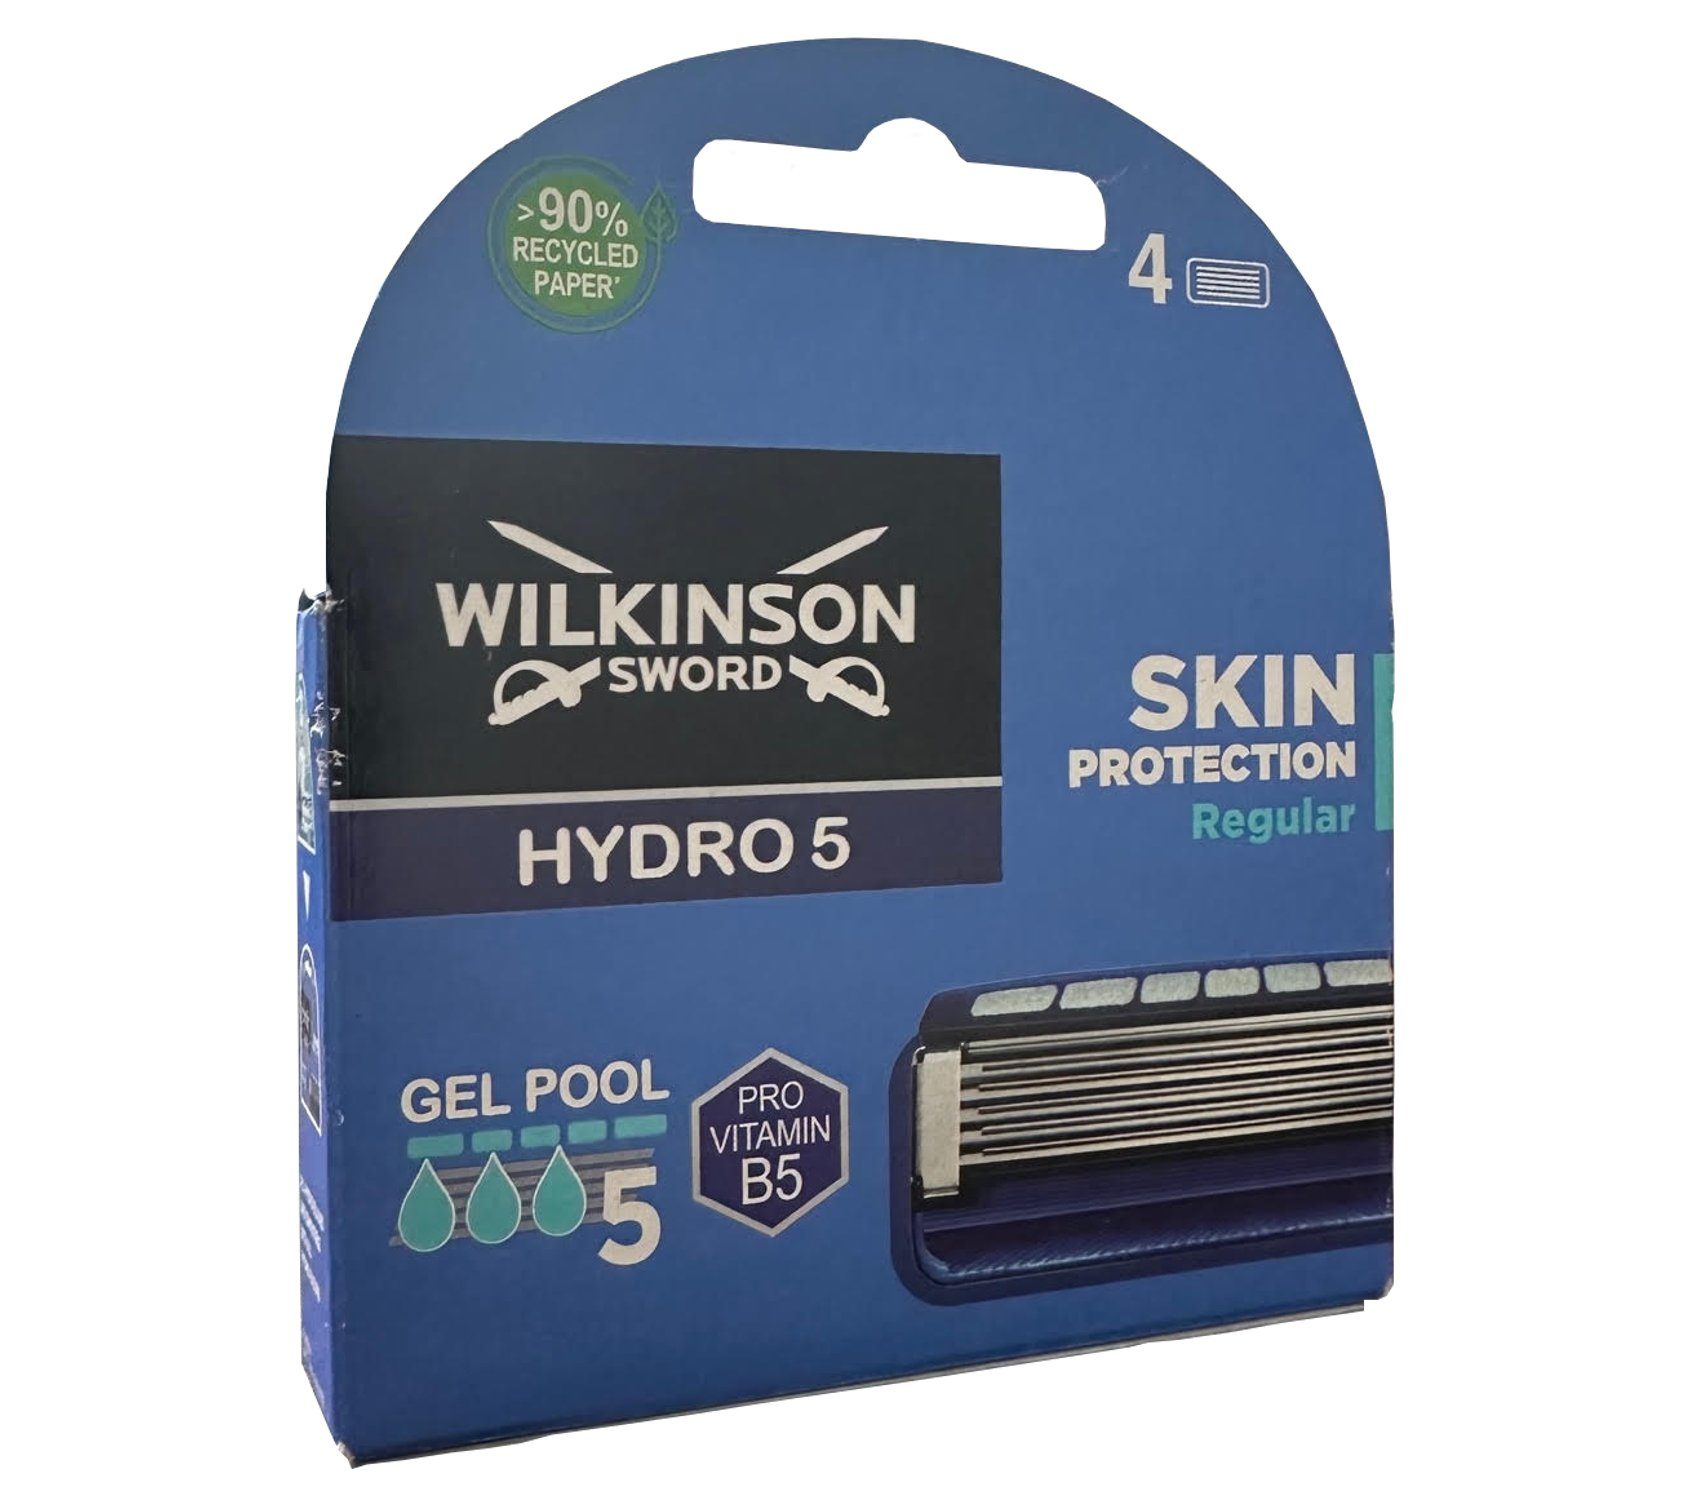 Pack, 5 Protection Klingen, Sking Anti-Reiz Guard, Regular Wilkinson Skin Gel-Pools, Hydro Rasierklingen 4er Rasierklingen Wilkinson 5